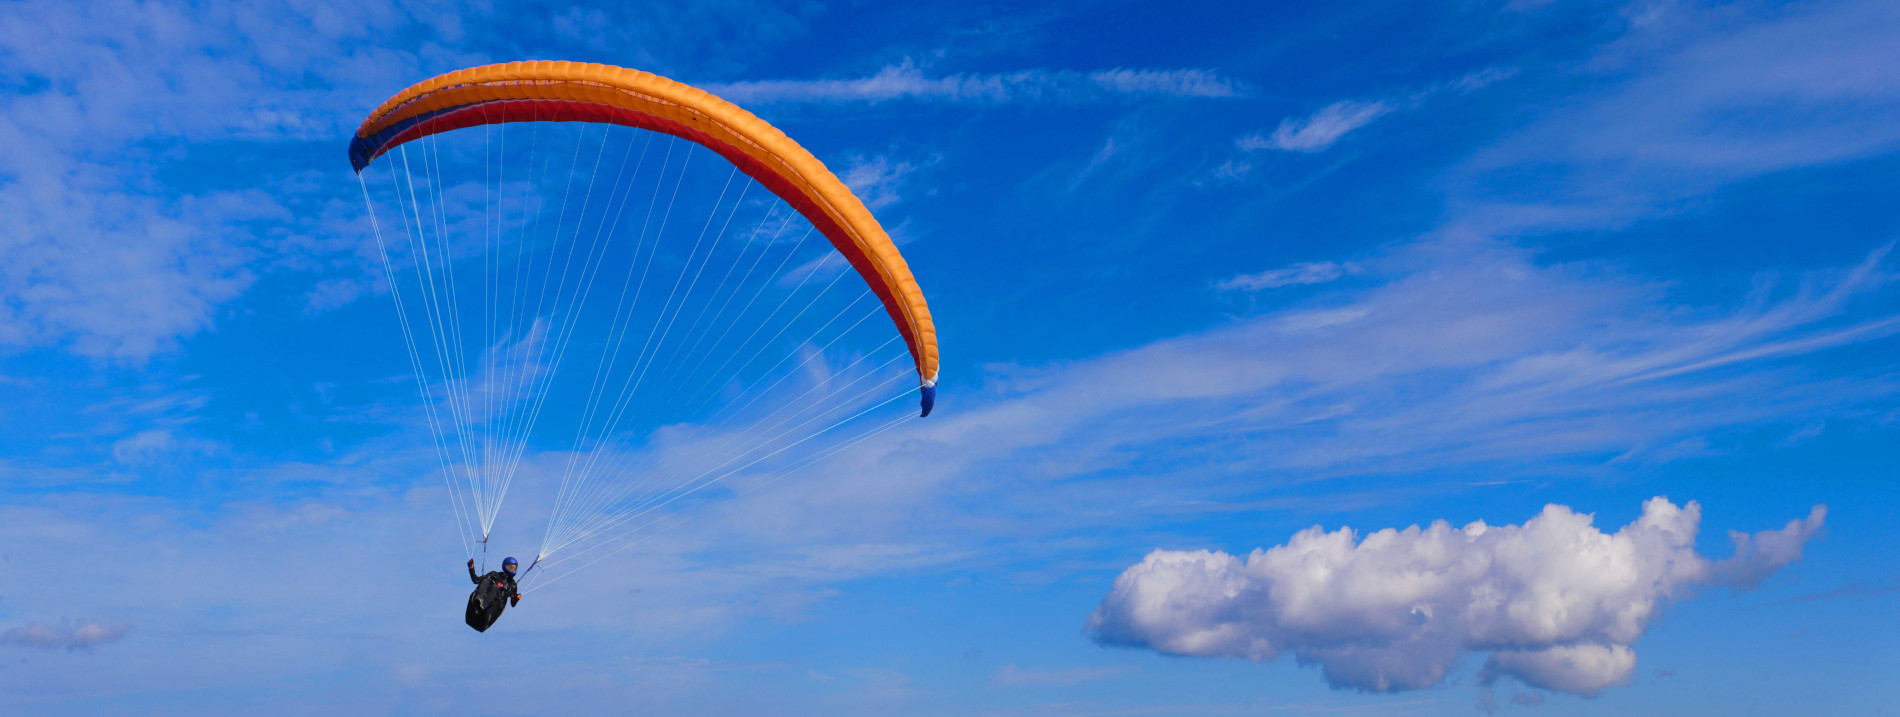 Image of a parachute.